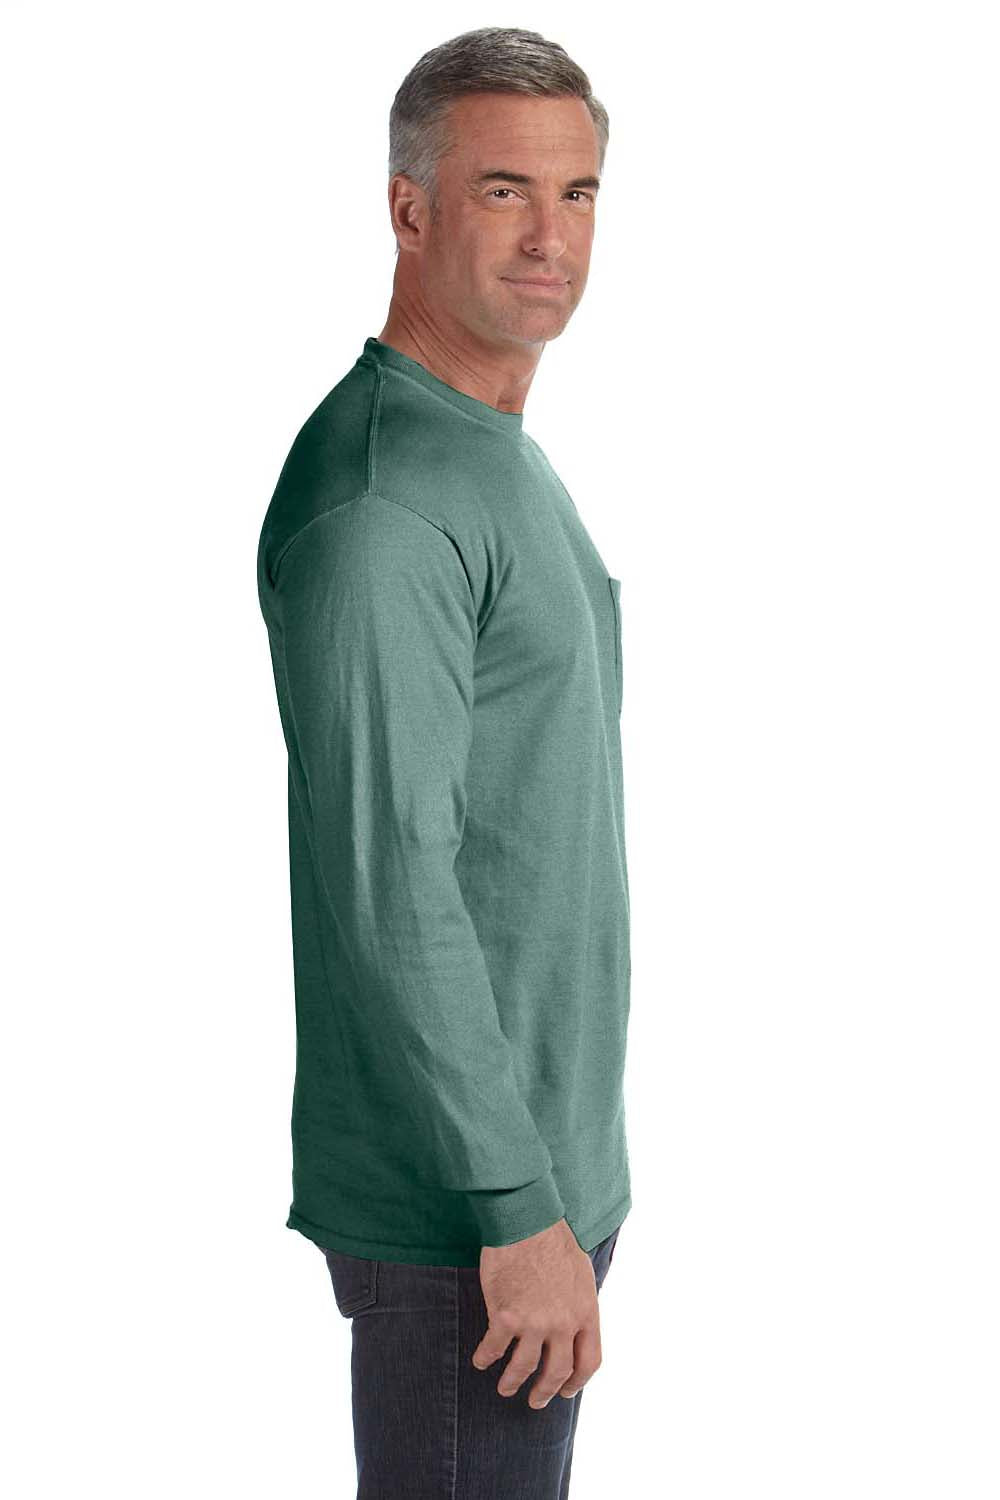 Comfort Colors C4410 Mens Long Sleeve Crewneck T-Shirt w/ Pocket Light Green Side